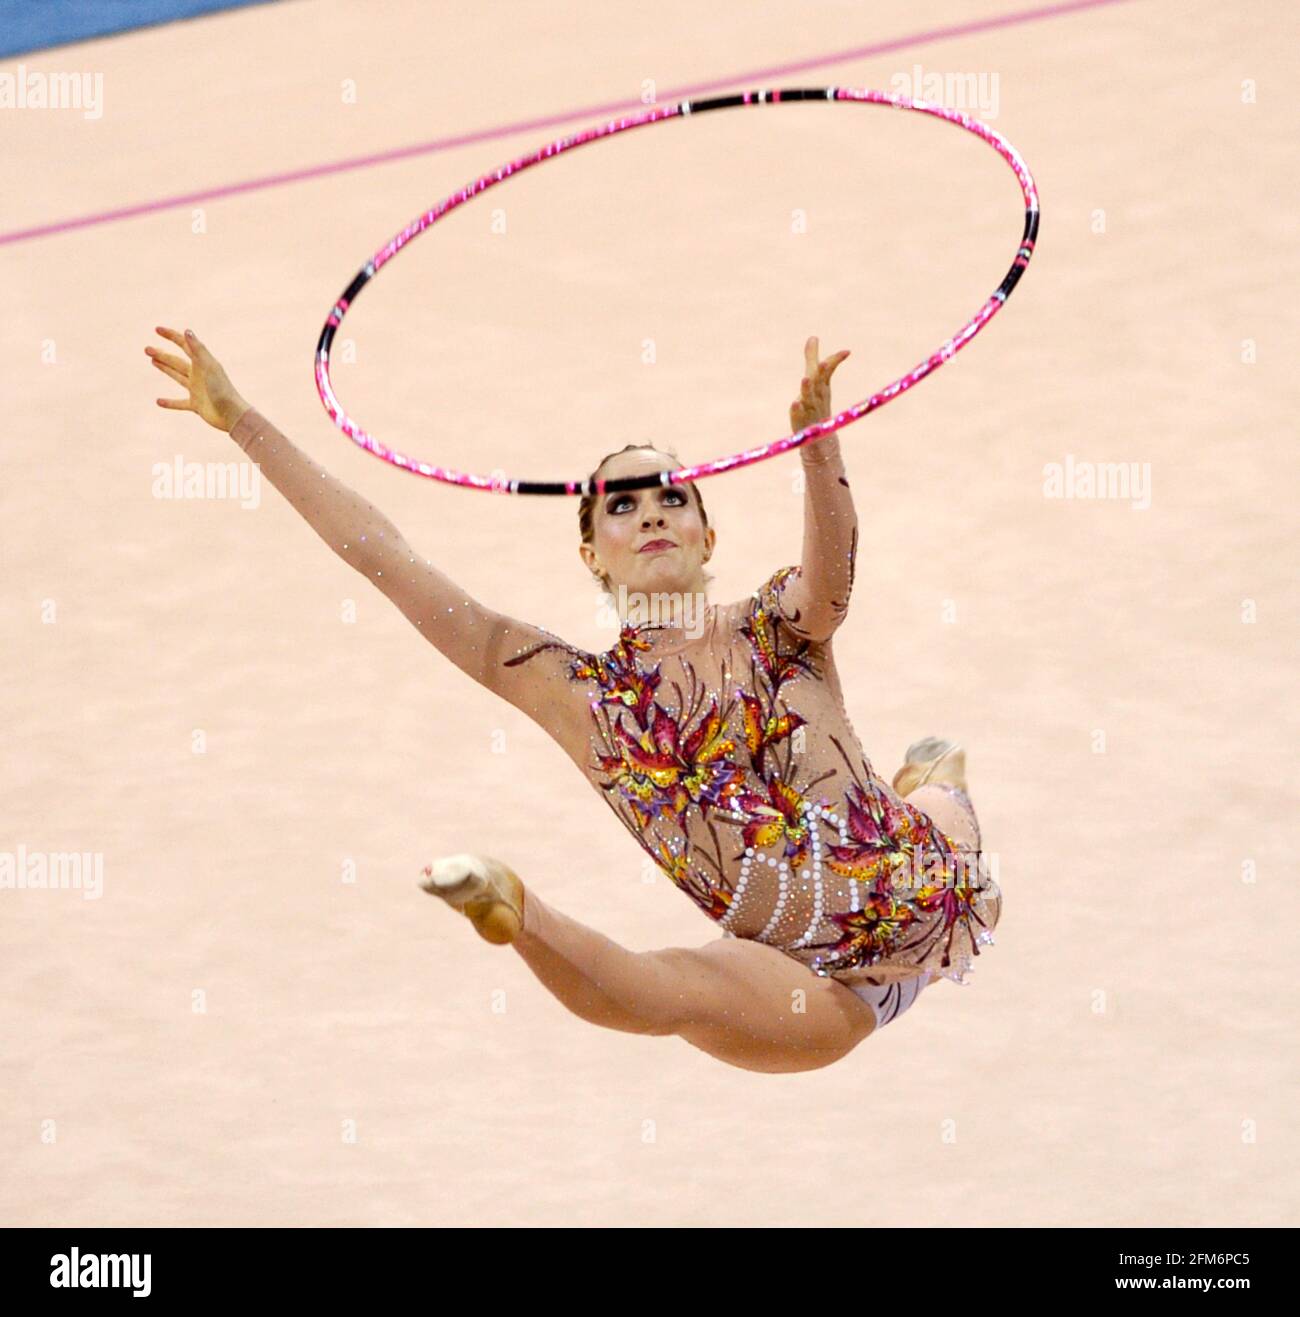 Joe Morgan's daughter stars as Stanford gymnast